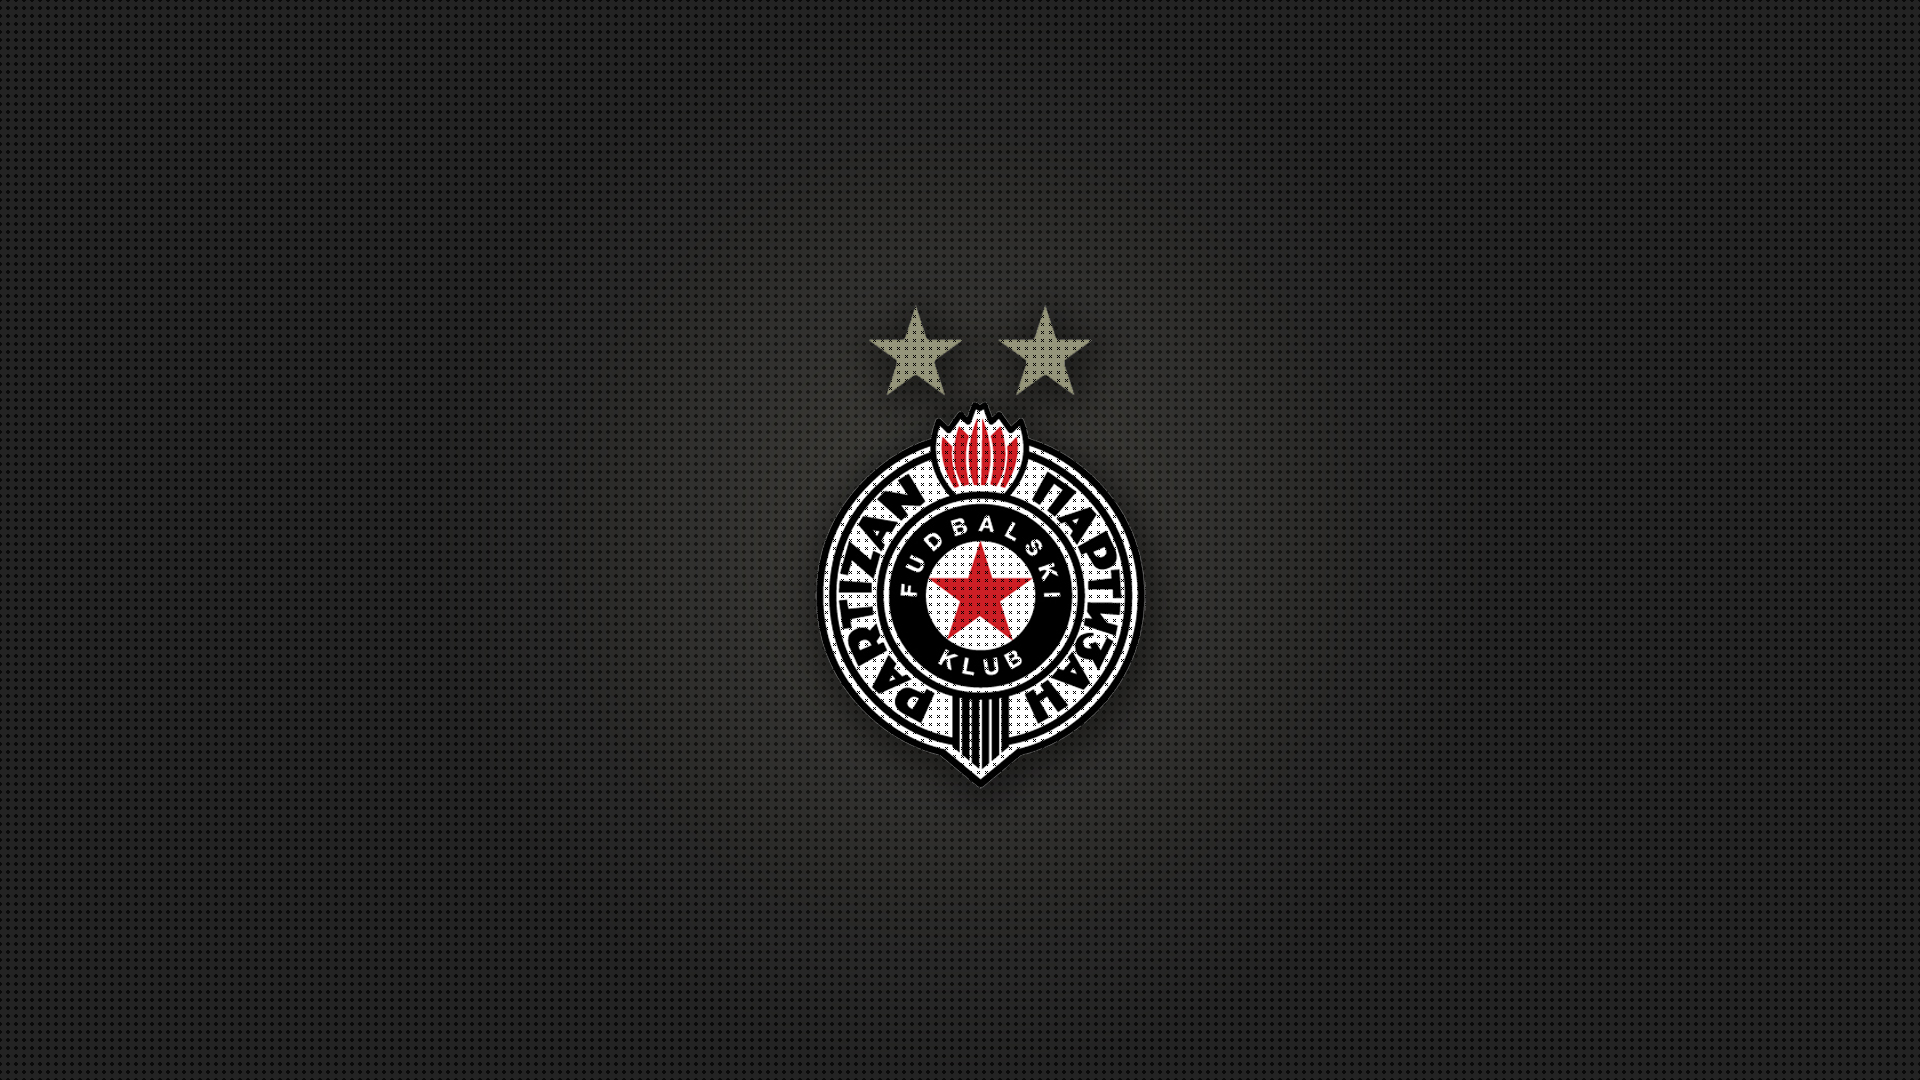 FK Partizan, FK Partizan, Visão Geral